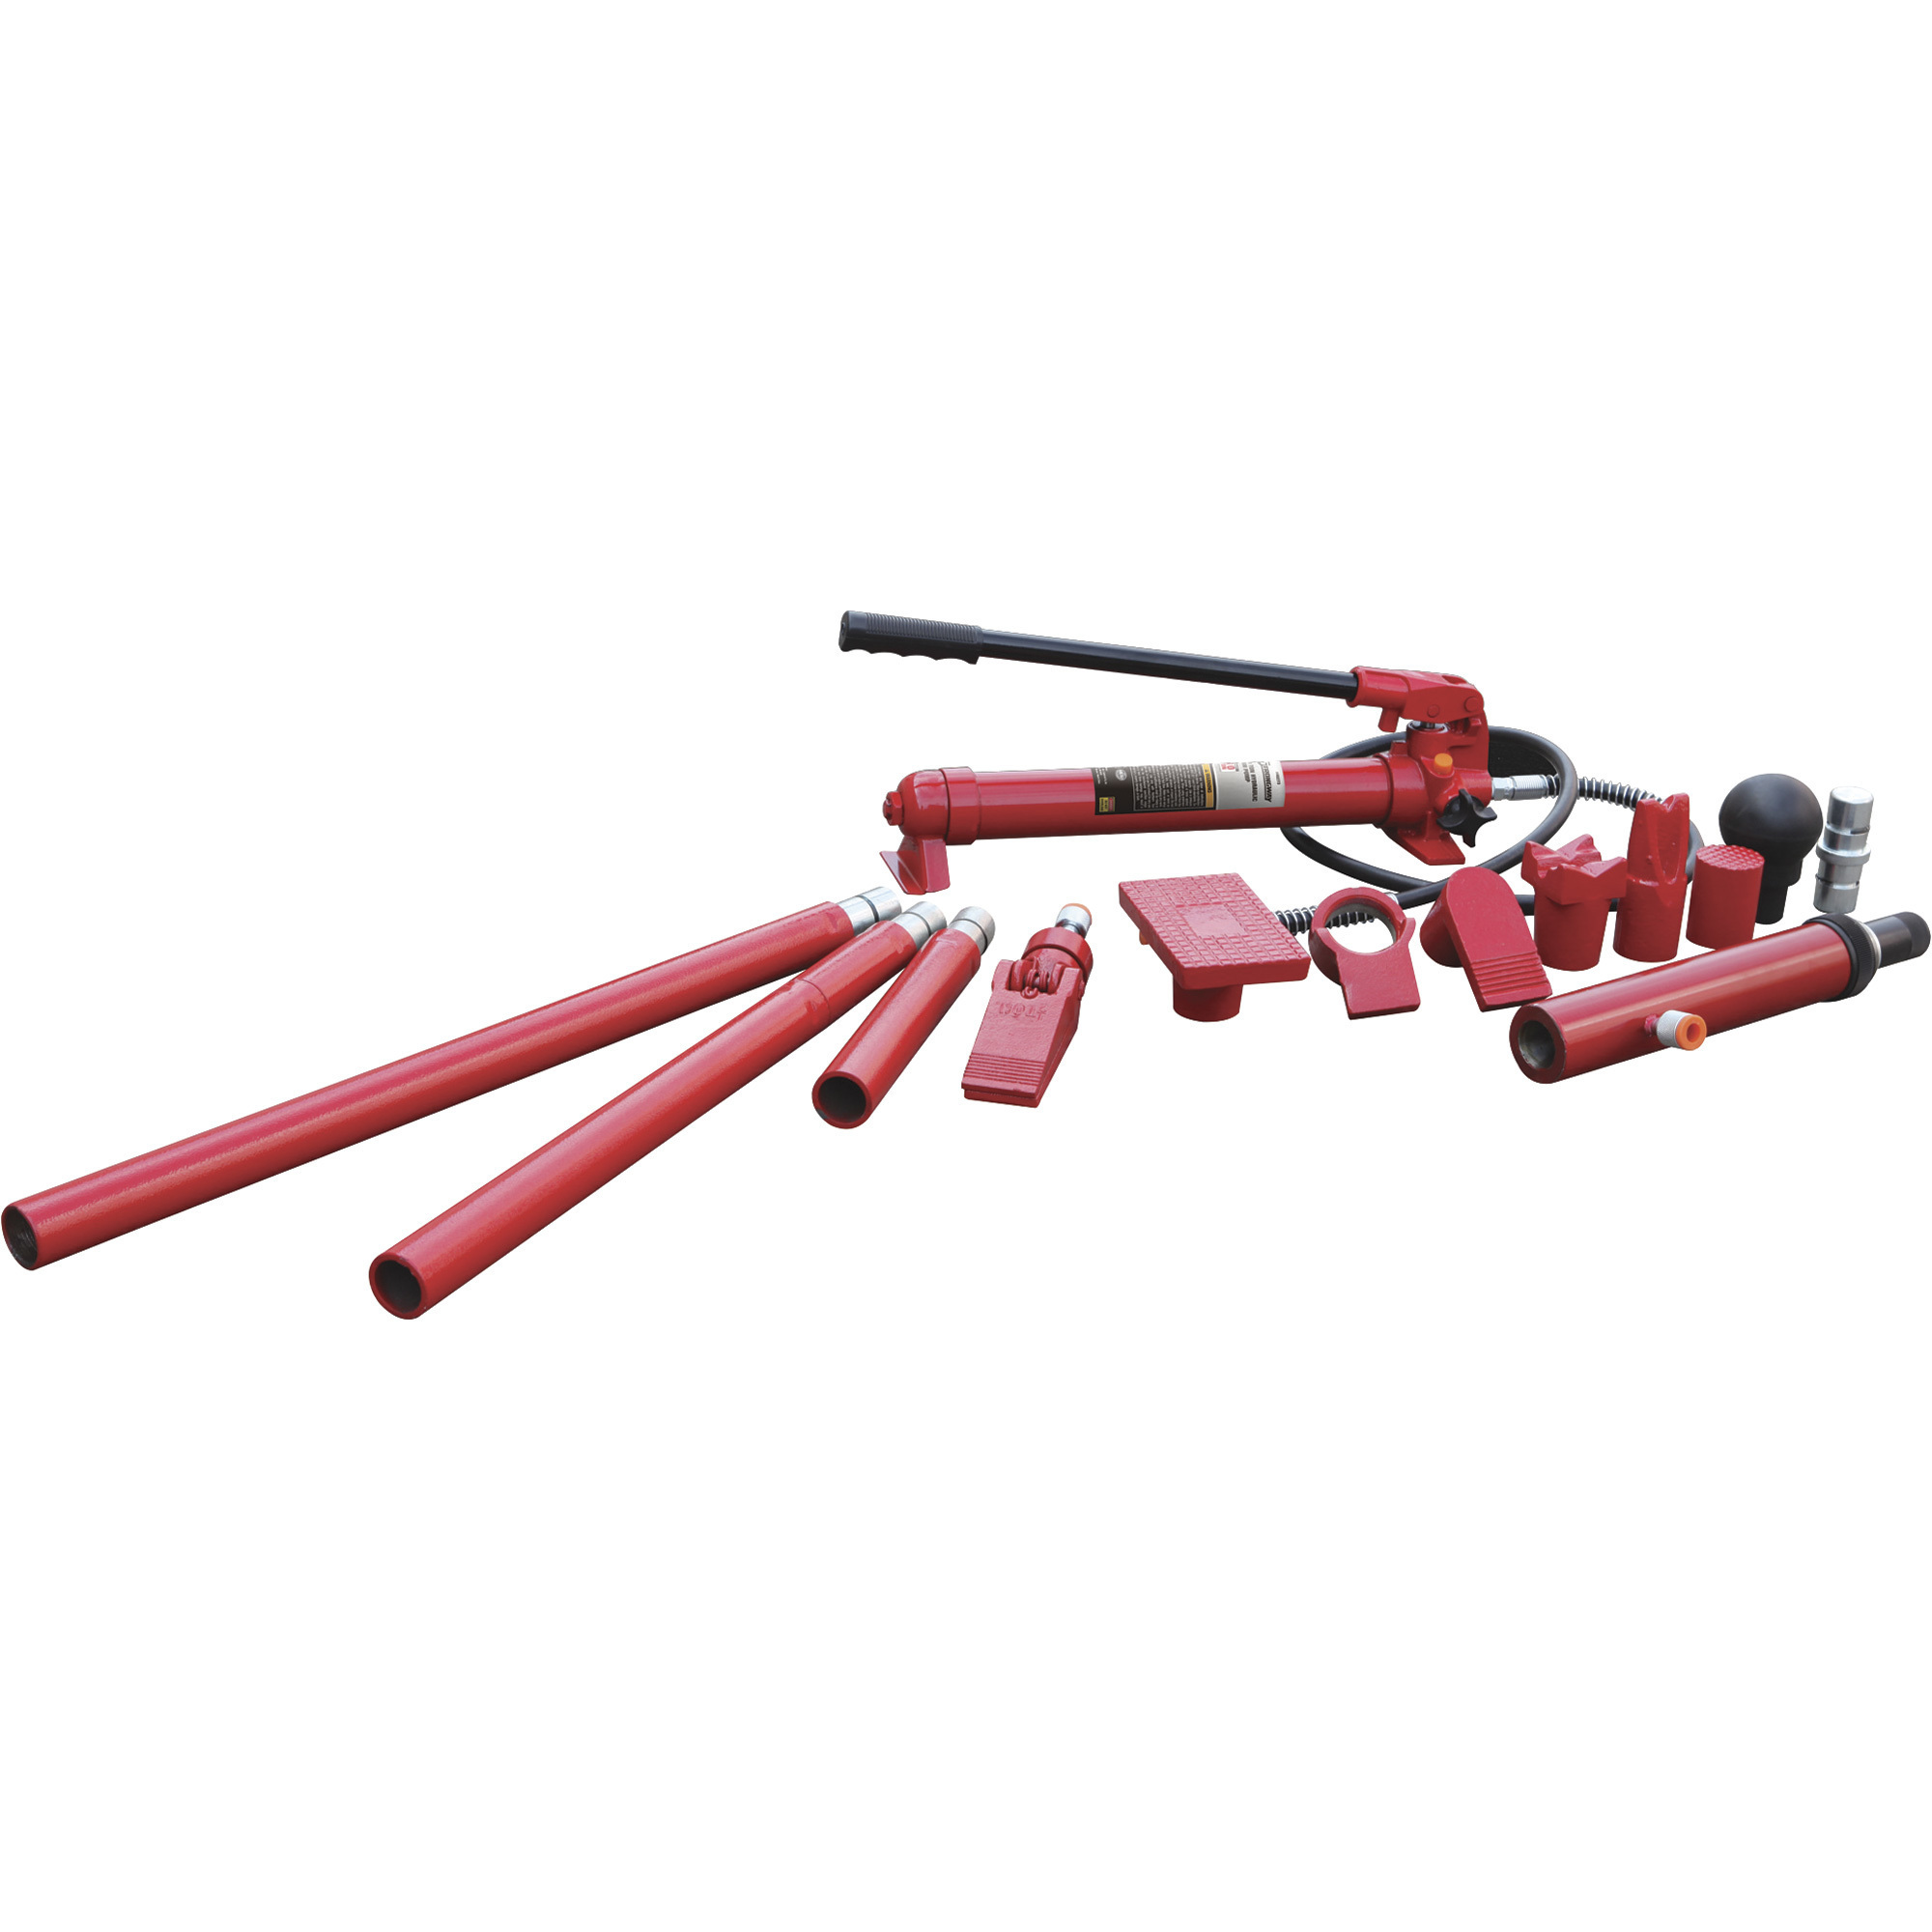 Strongway Hydraulic Portable Ram Kit â 10-Ton Capacity, 16 Pieces